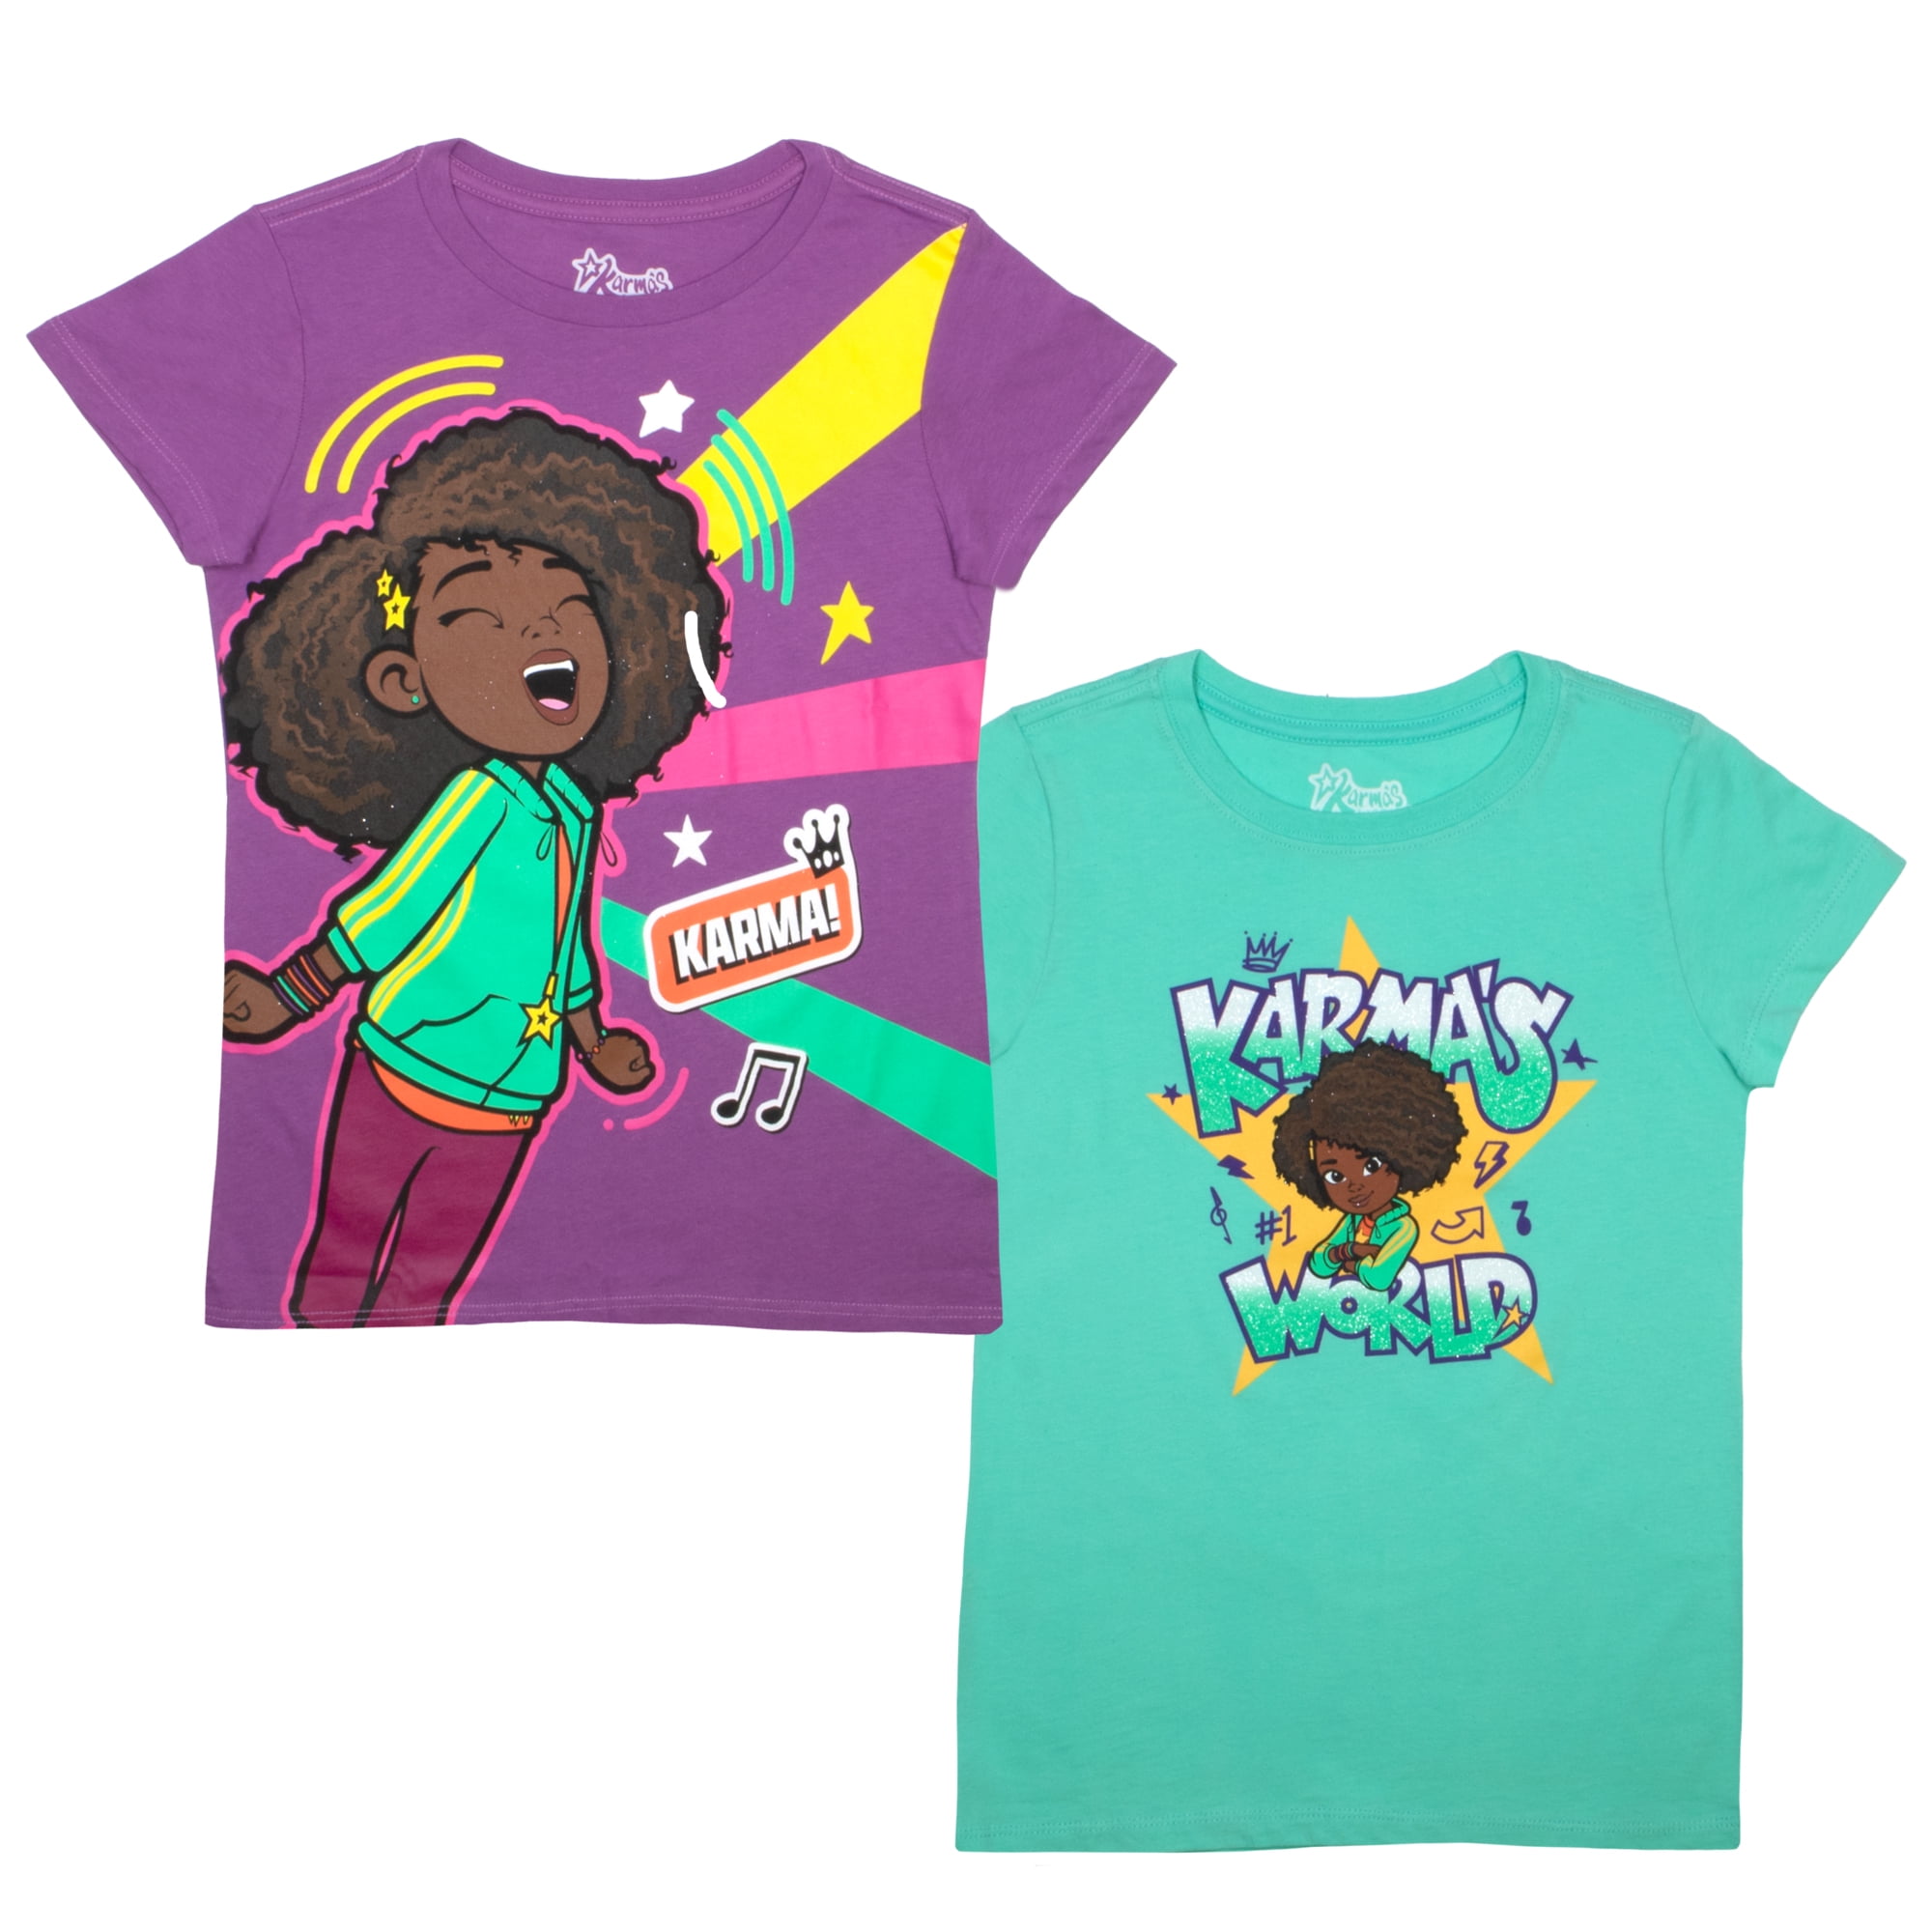 Karma\'s World Girls T-Shirts Sleeve (Sizes for 4-16) 2 Short Pack Tees 2 Girls Pack